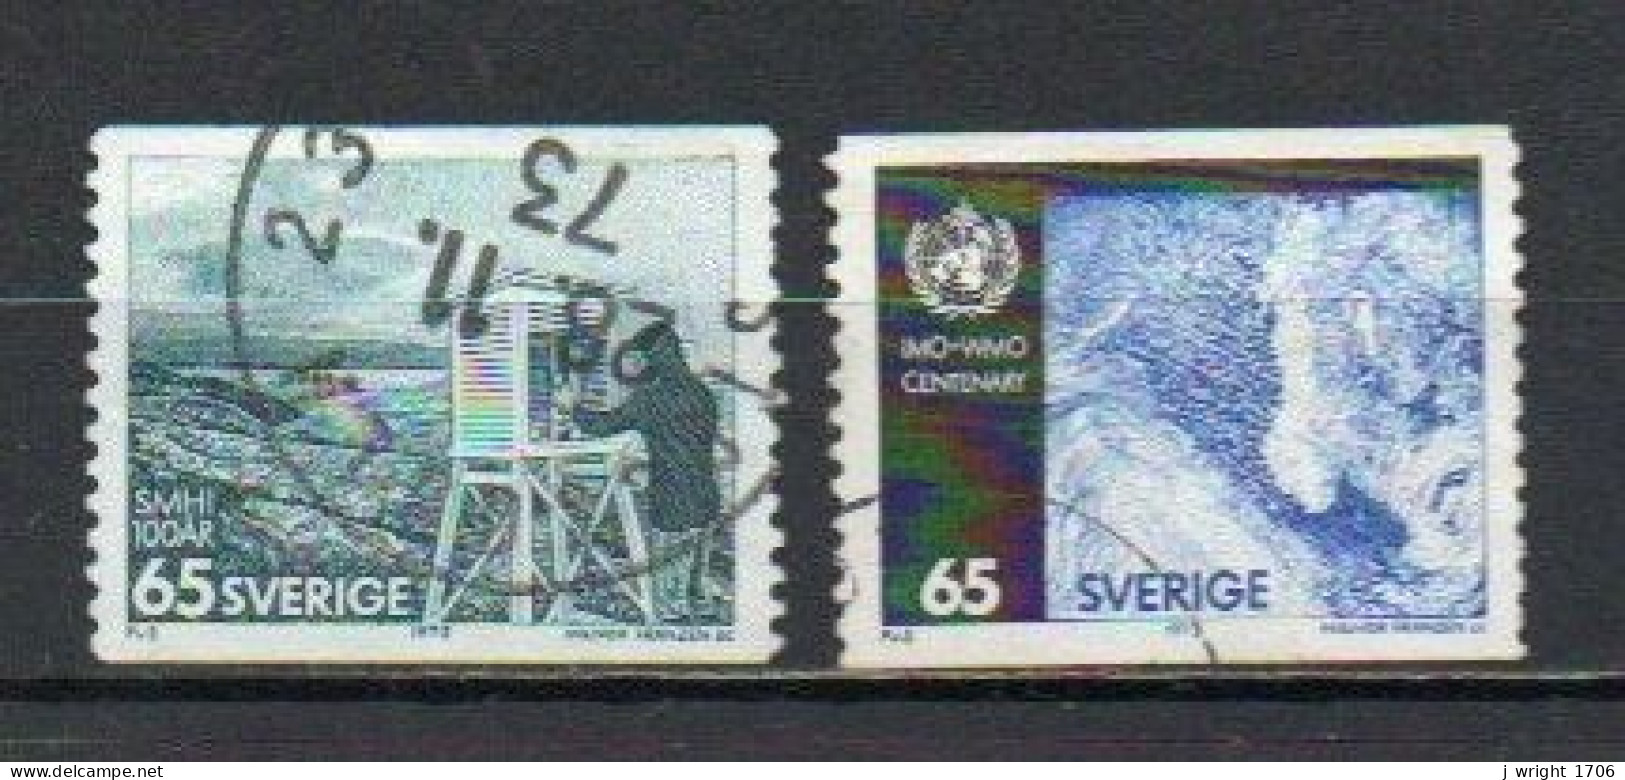 Sweden, 1973, Meteorological Service, Set, USED - Used Stamps